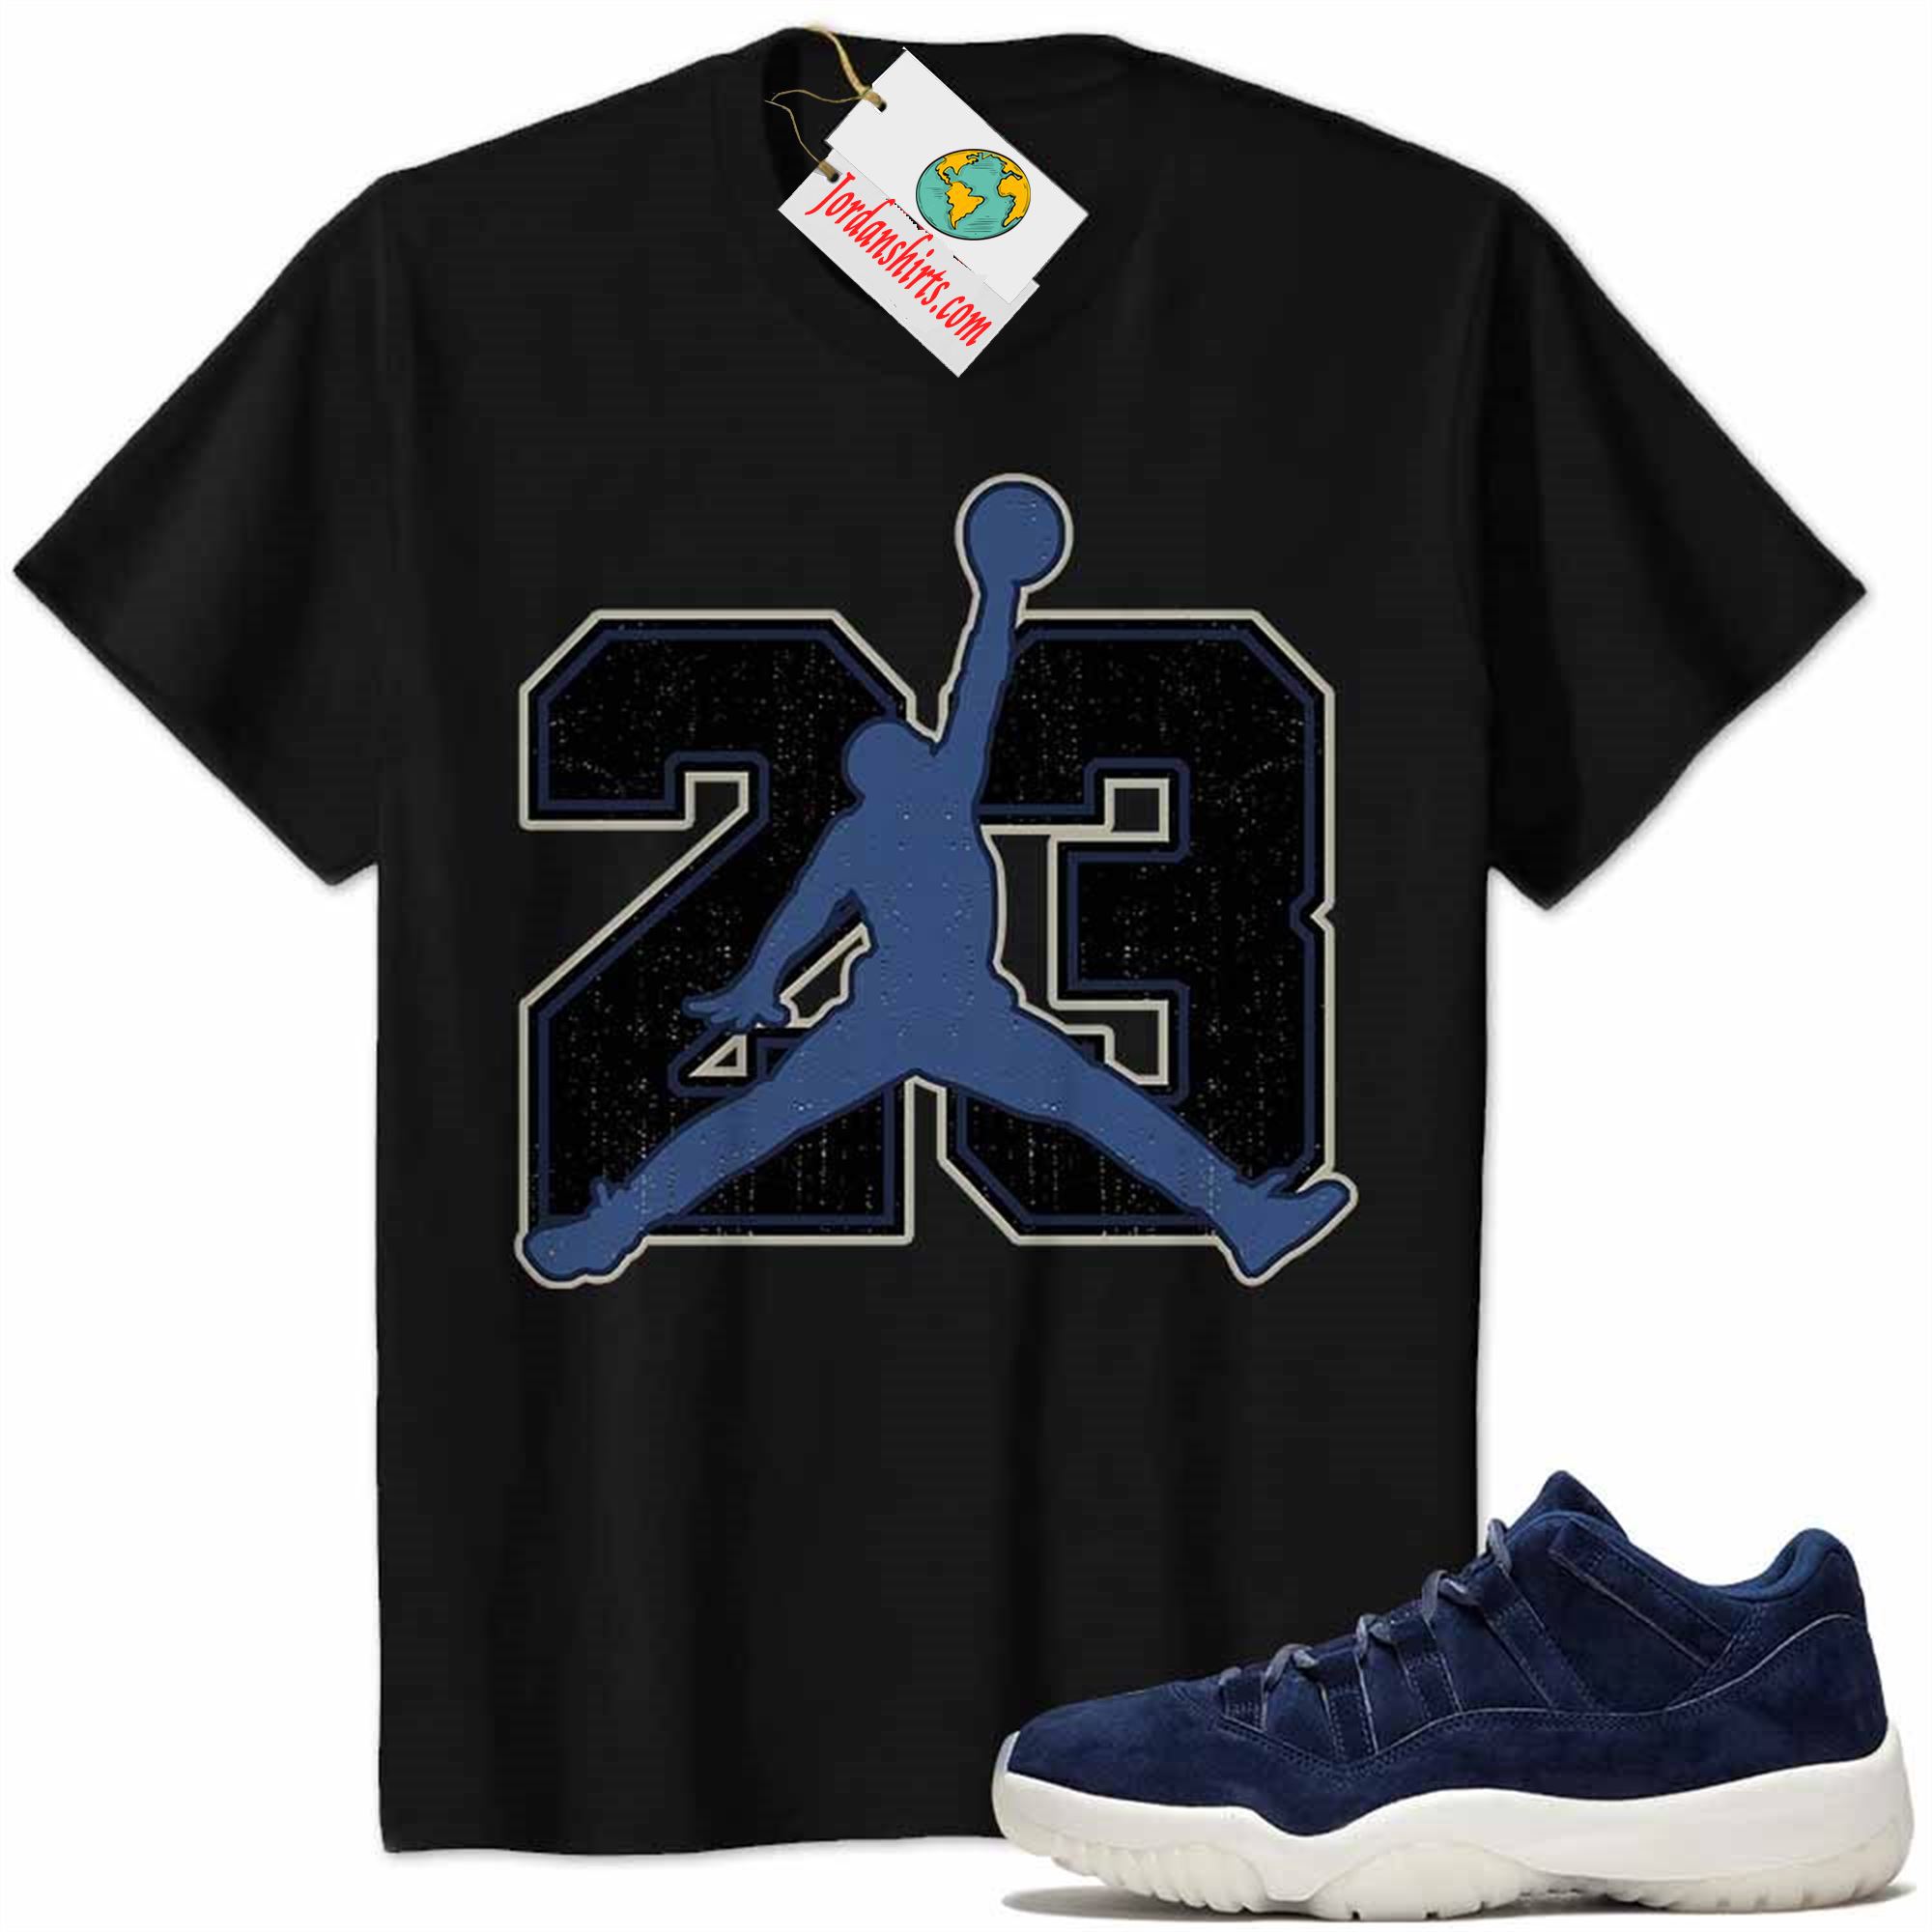 Jordan 11 Shirt, Jordan 11 Derek Jeter Shirt Jumpman No23 Black Plus Size Up To 5xl